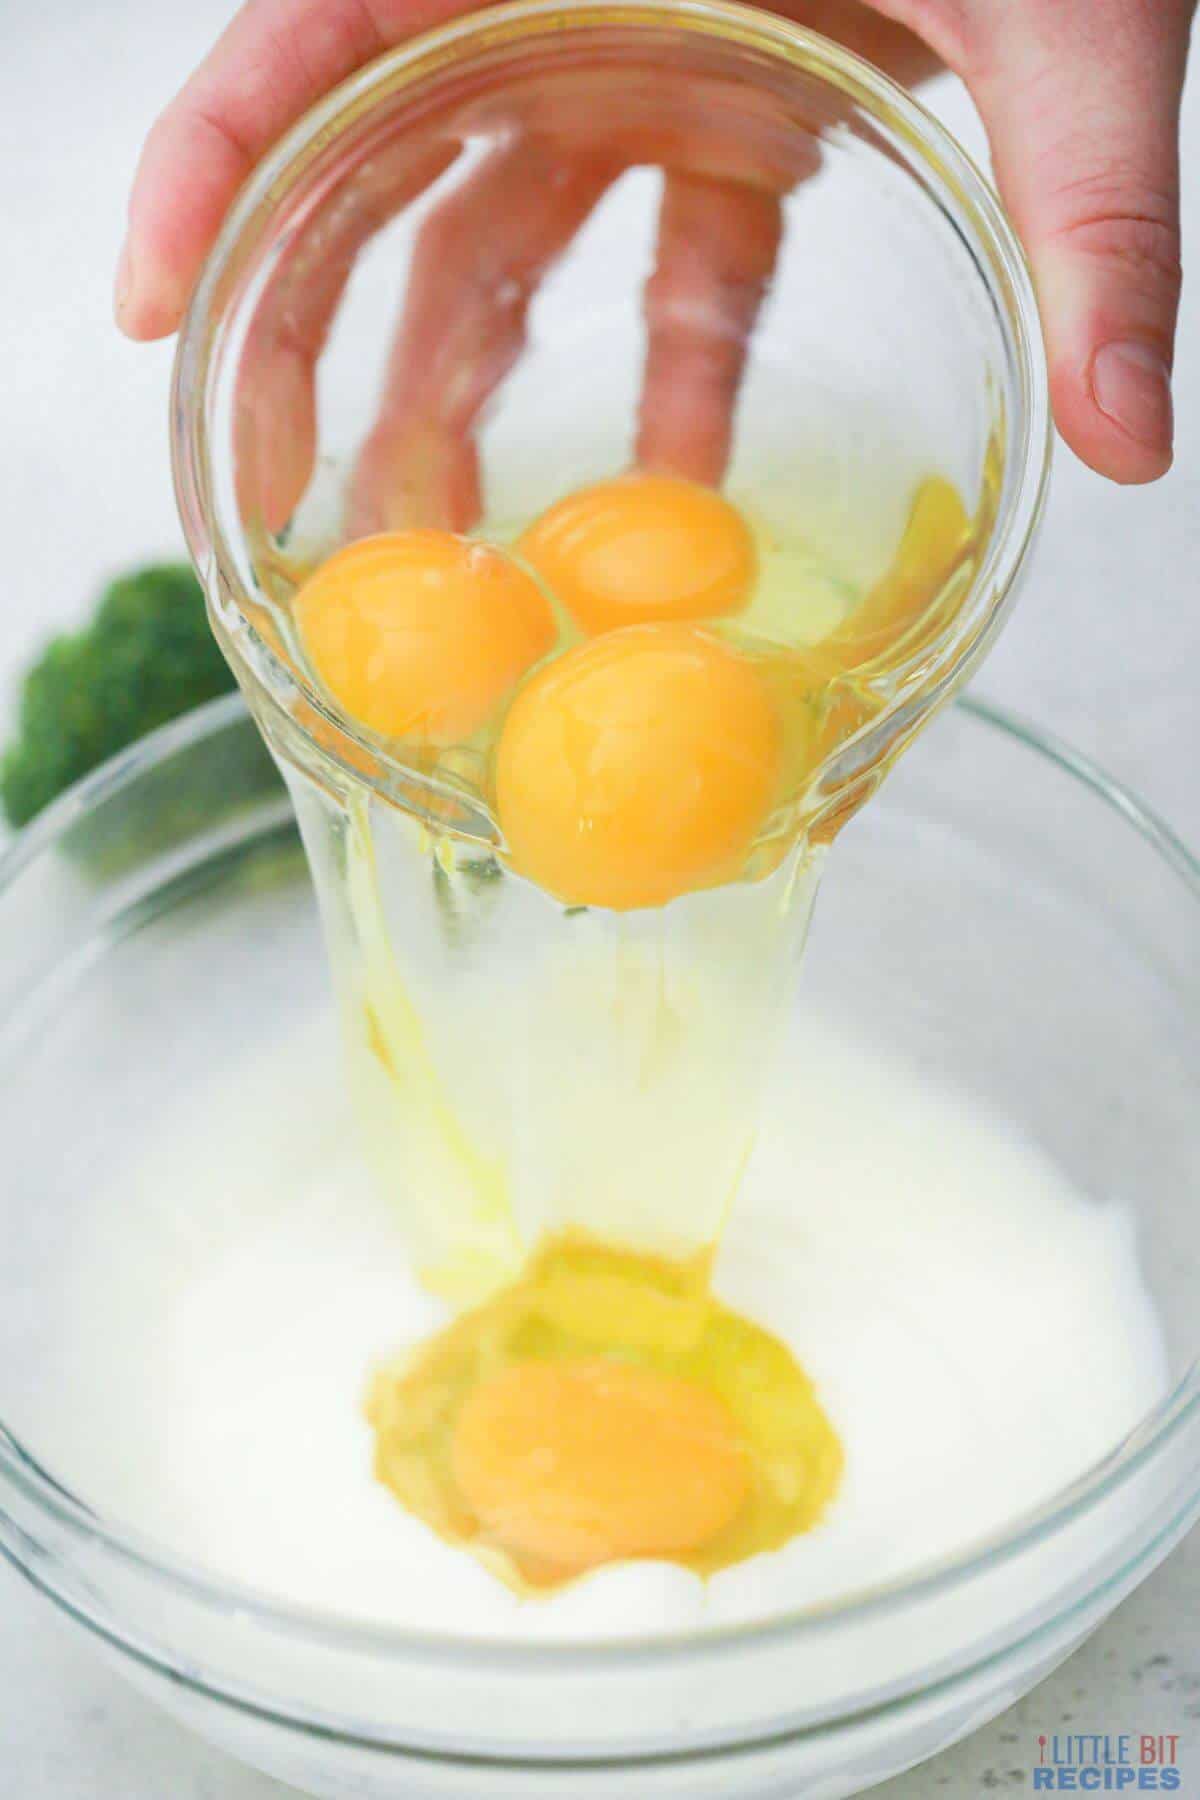 adding eggs to milk in bowl.